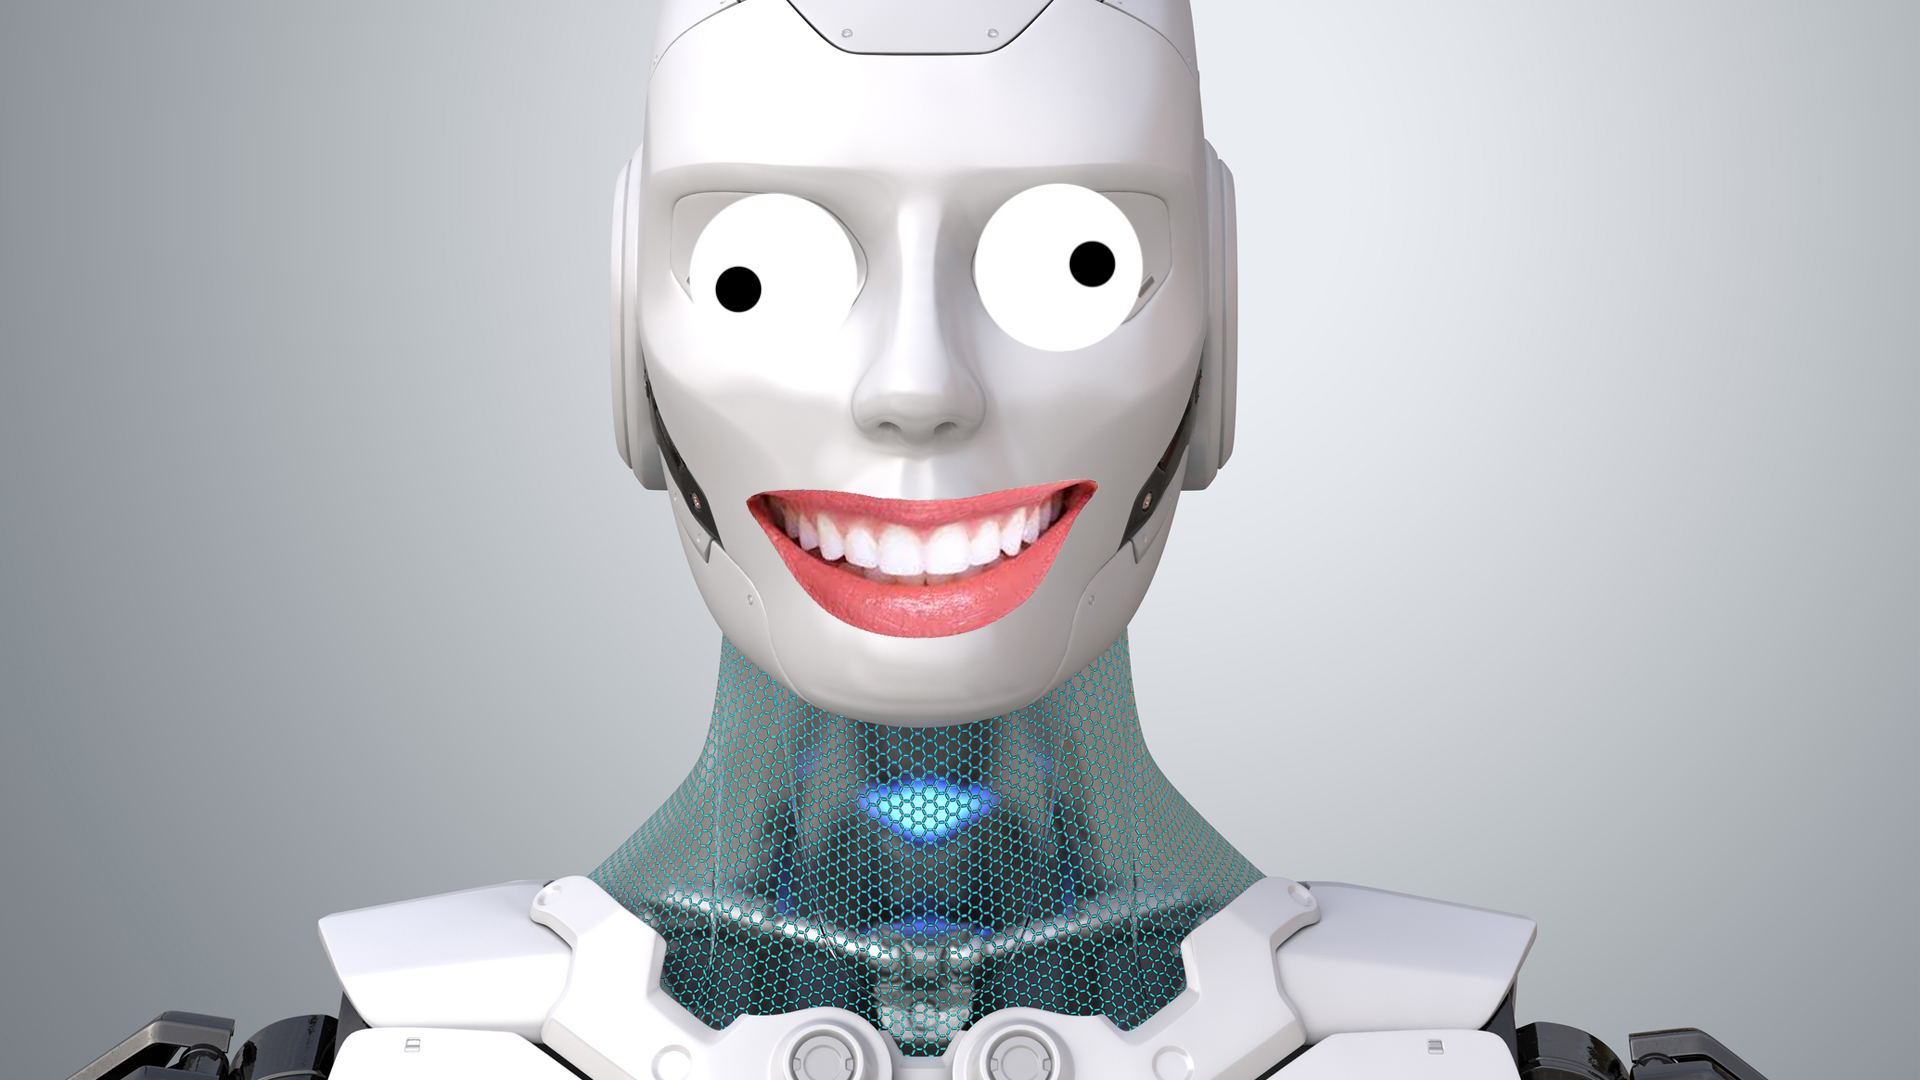 A robot with a odd grin